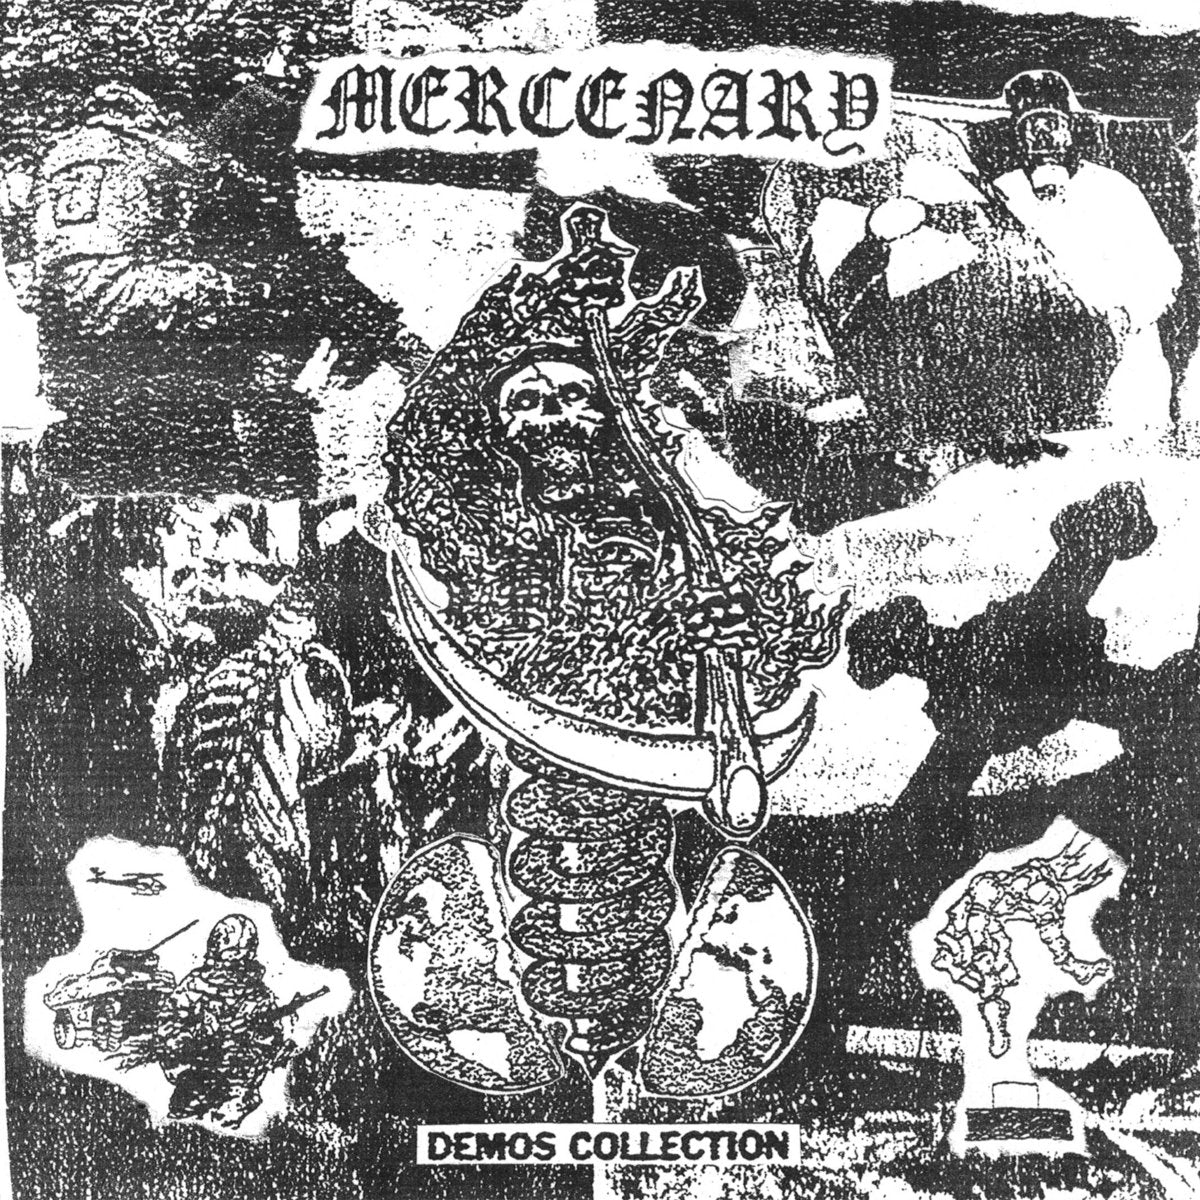 Mercenary - Demos Collection LP - Vinyl - Beach Impediment